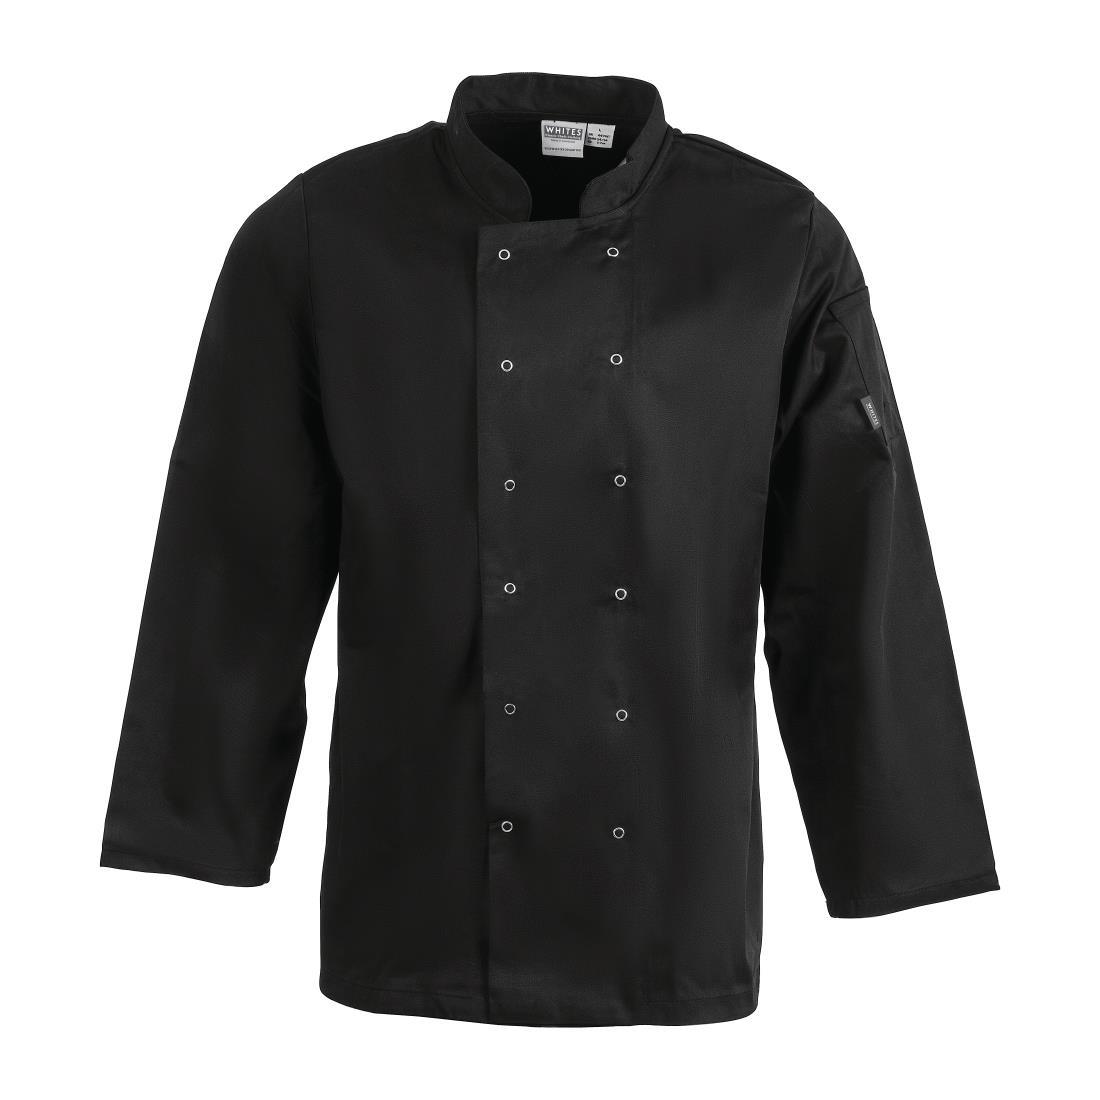 Whites Vegas Unisex Chefs Jacket Long Sleeve Black L - A438-L  - 1